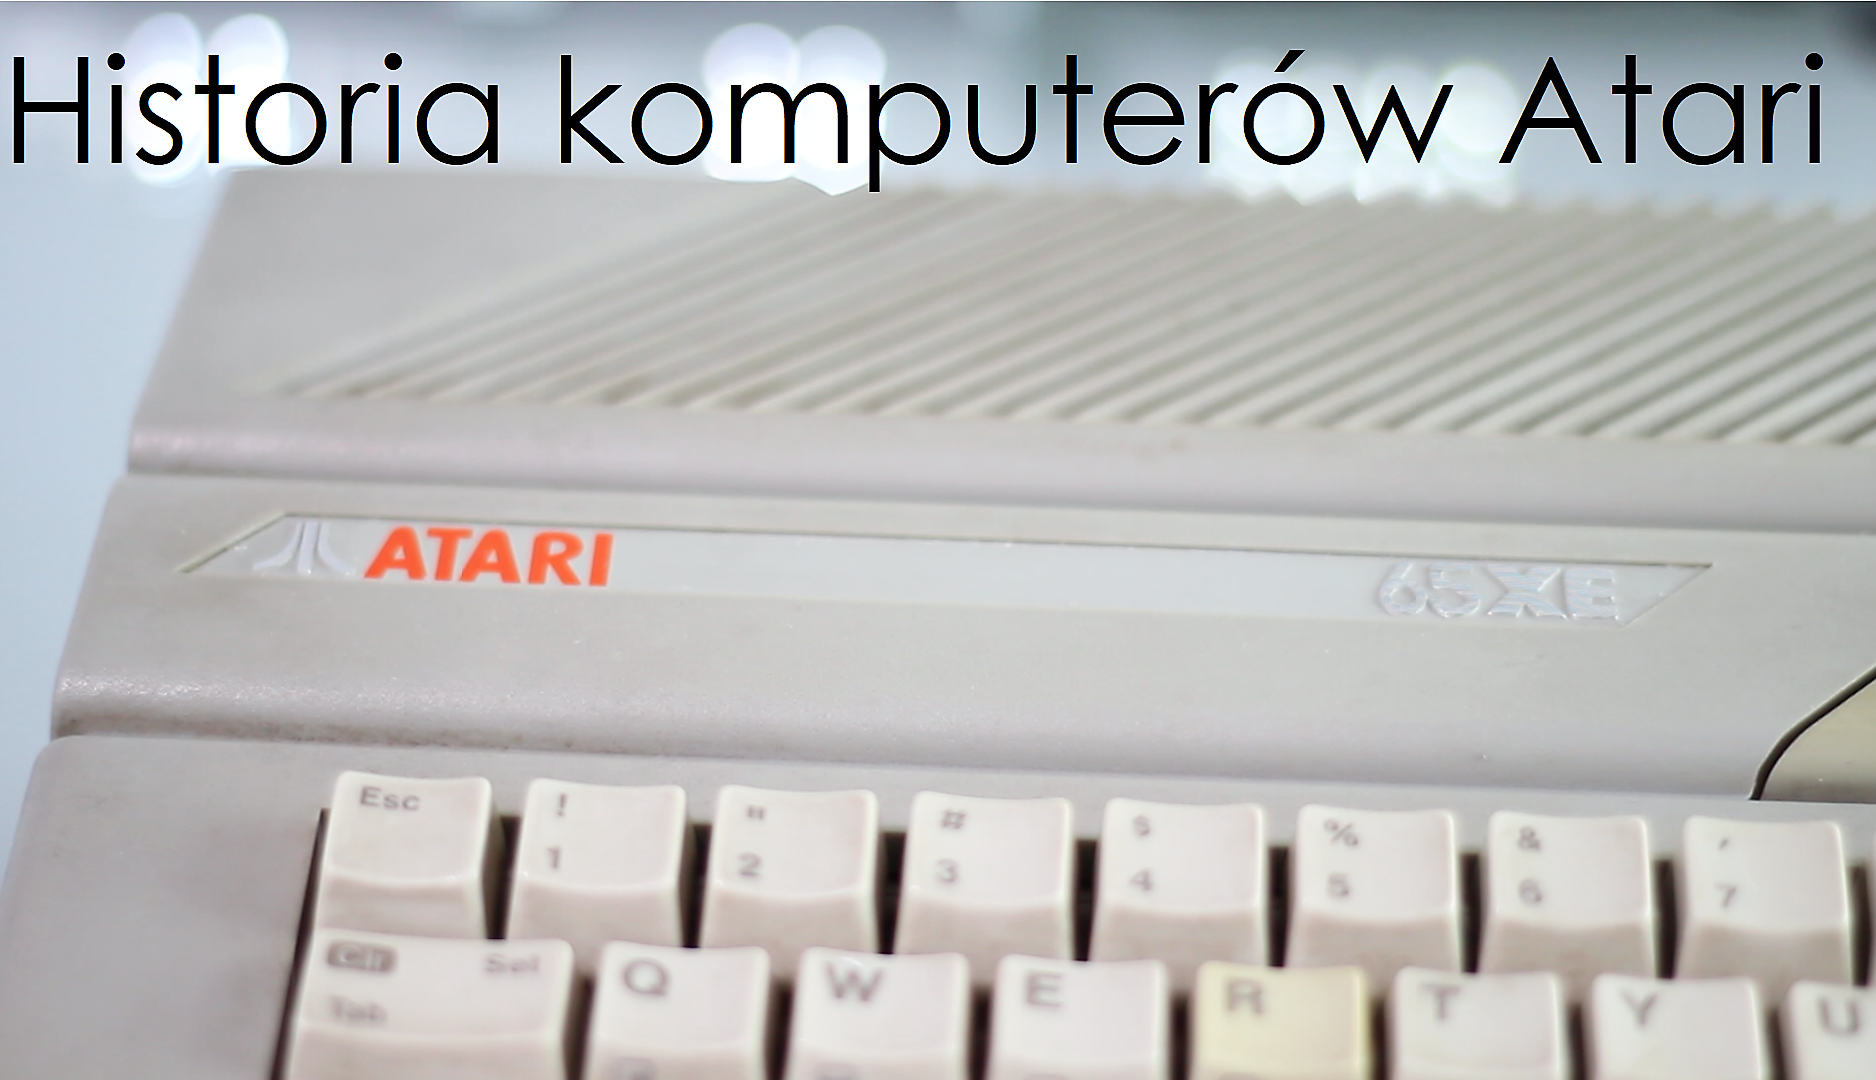 Historia Atari